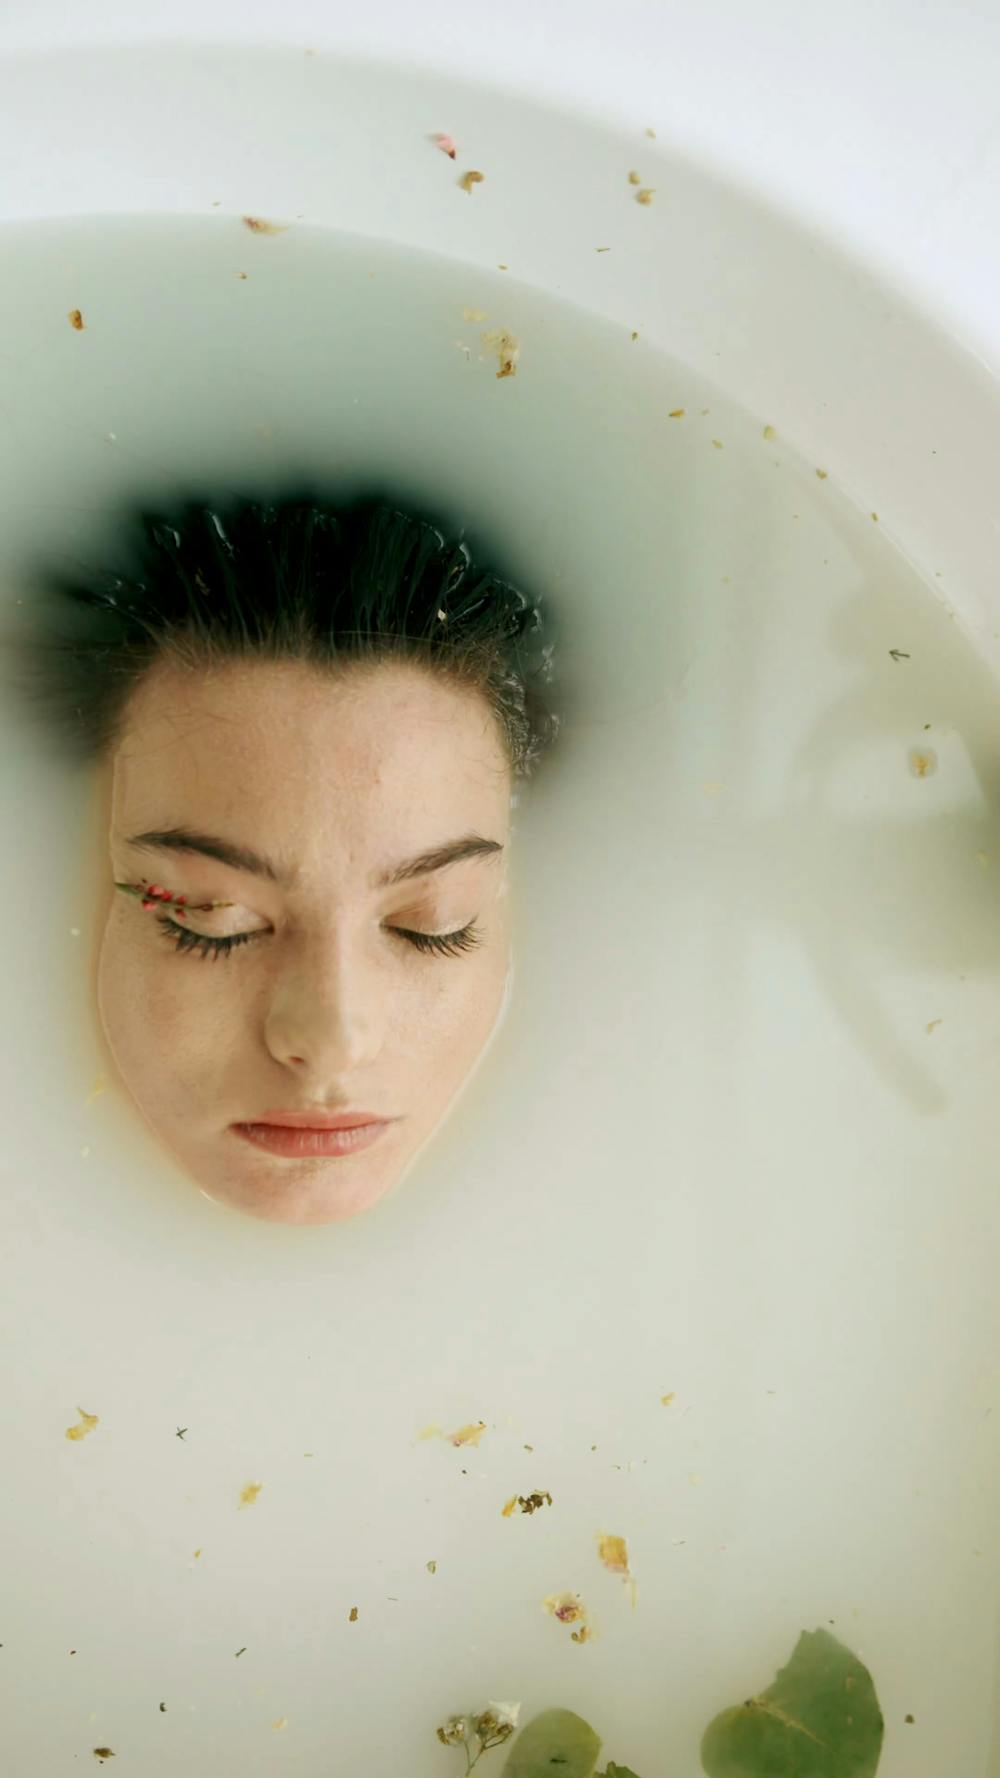 Submerged Woman In Bathtub · Free Stock Video